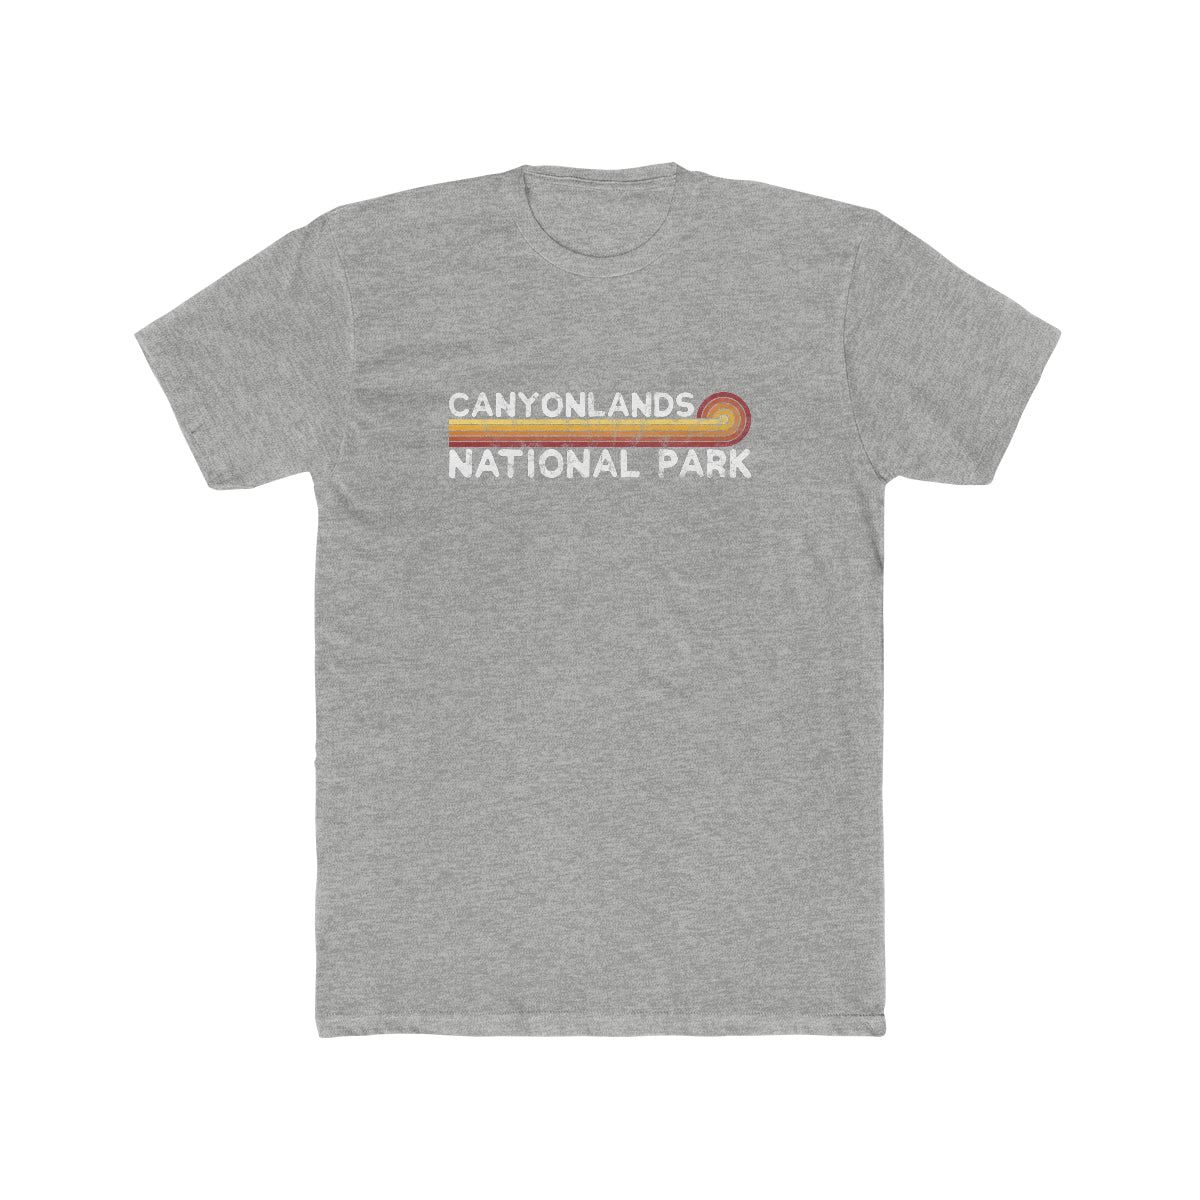 Canyonlands National Park T-Shirt - Vintage Stretched Sunrise Utah Colors